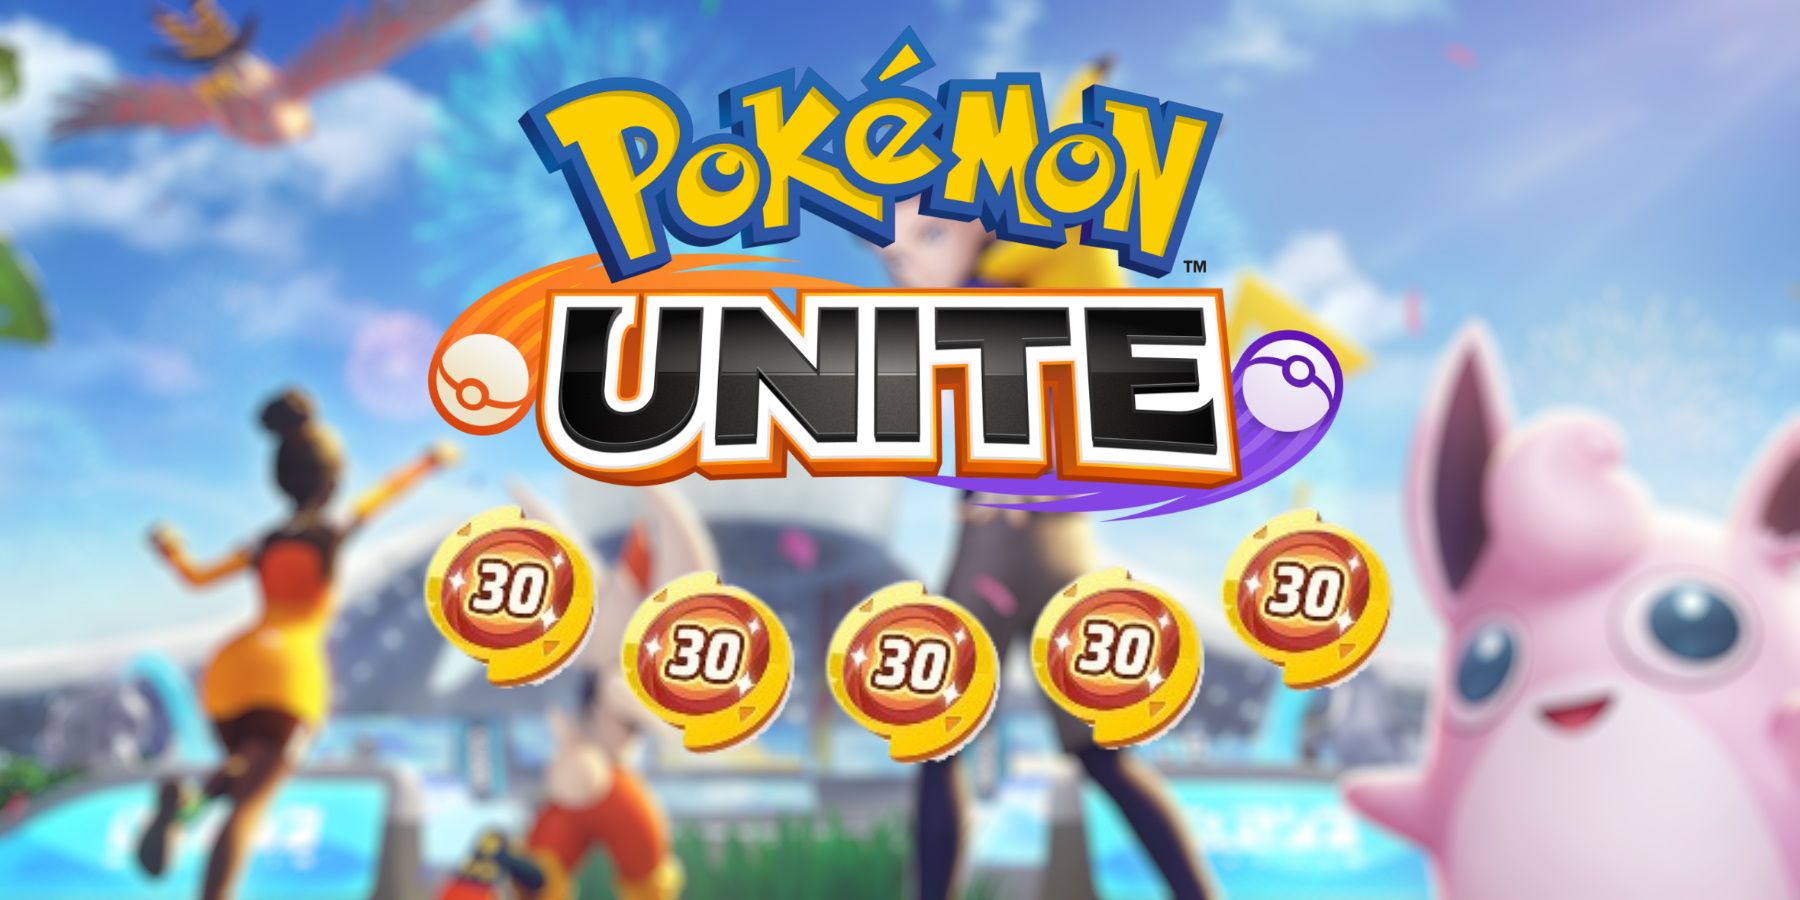 Pokemon Unite logo with super item enhancers